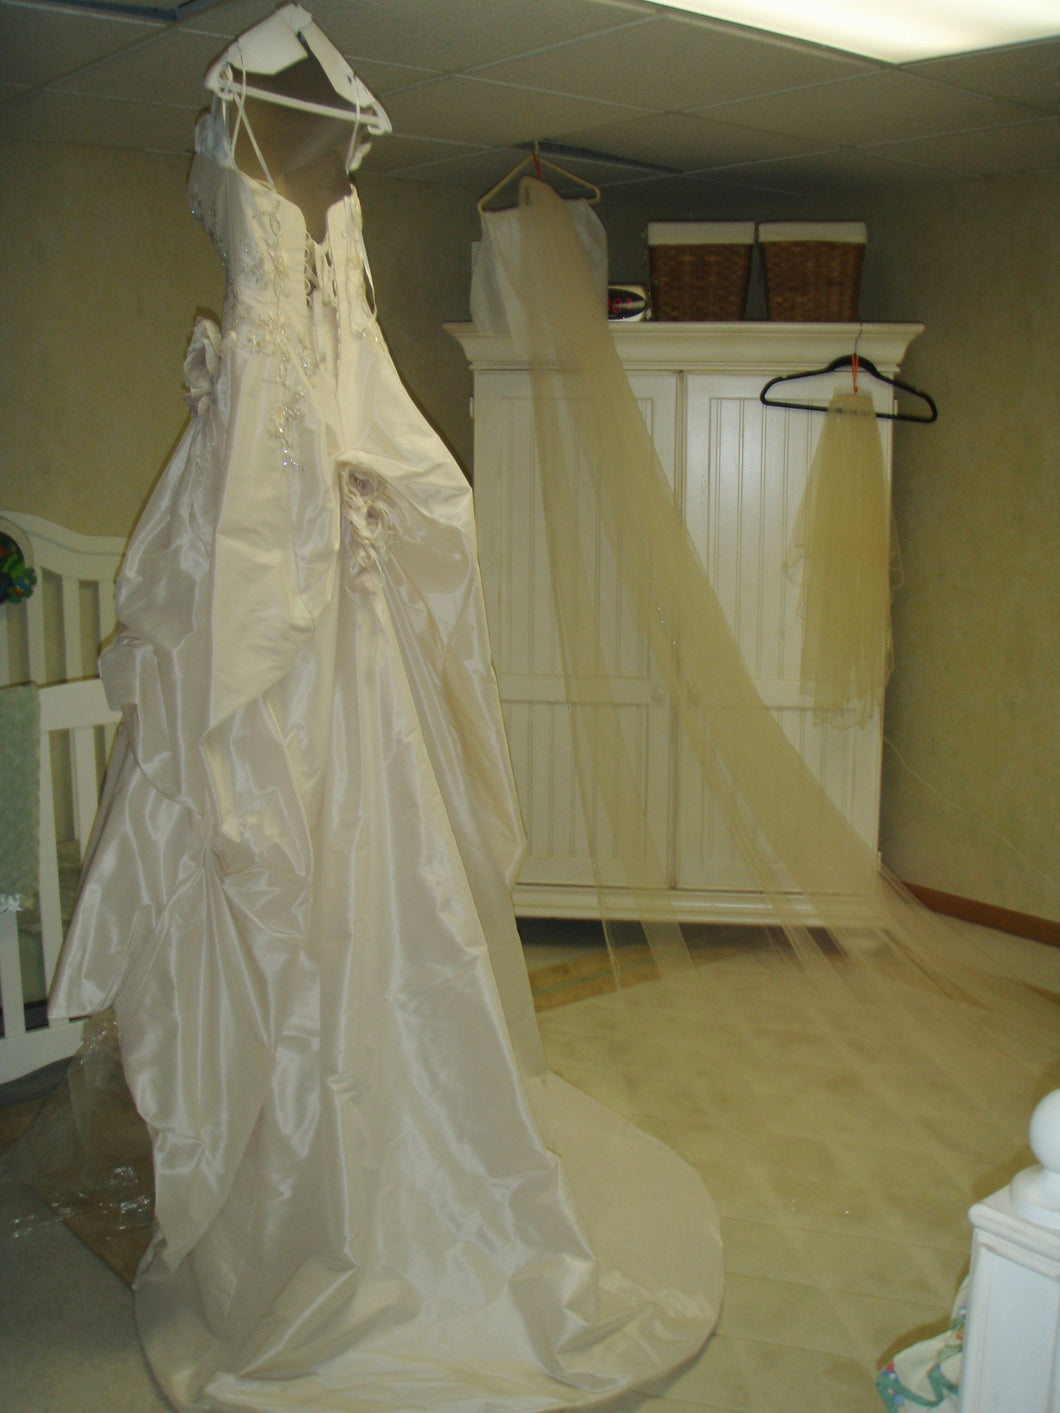 Demetrios 'Beaded Dress' - Demetrios - Nearly Newlywed Bridal Boutique - 1